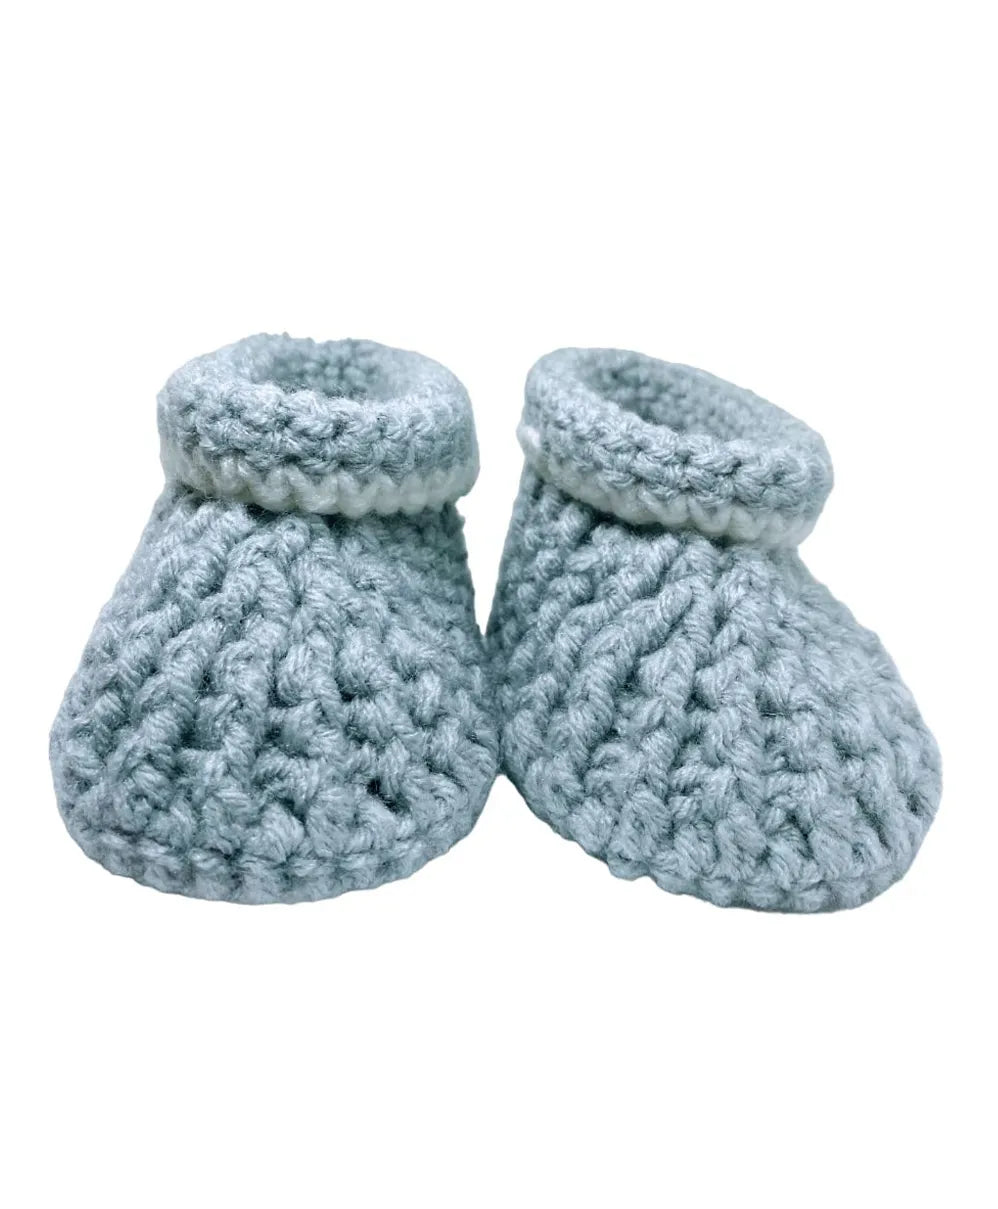 Pikkaboo Cuddles & Snuggles Crochet Baby Booties - Grey - Laadlee